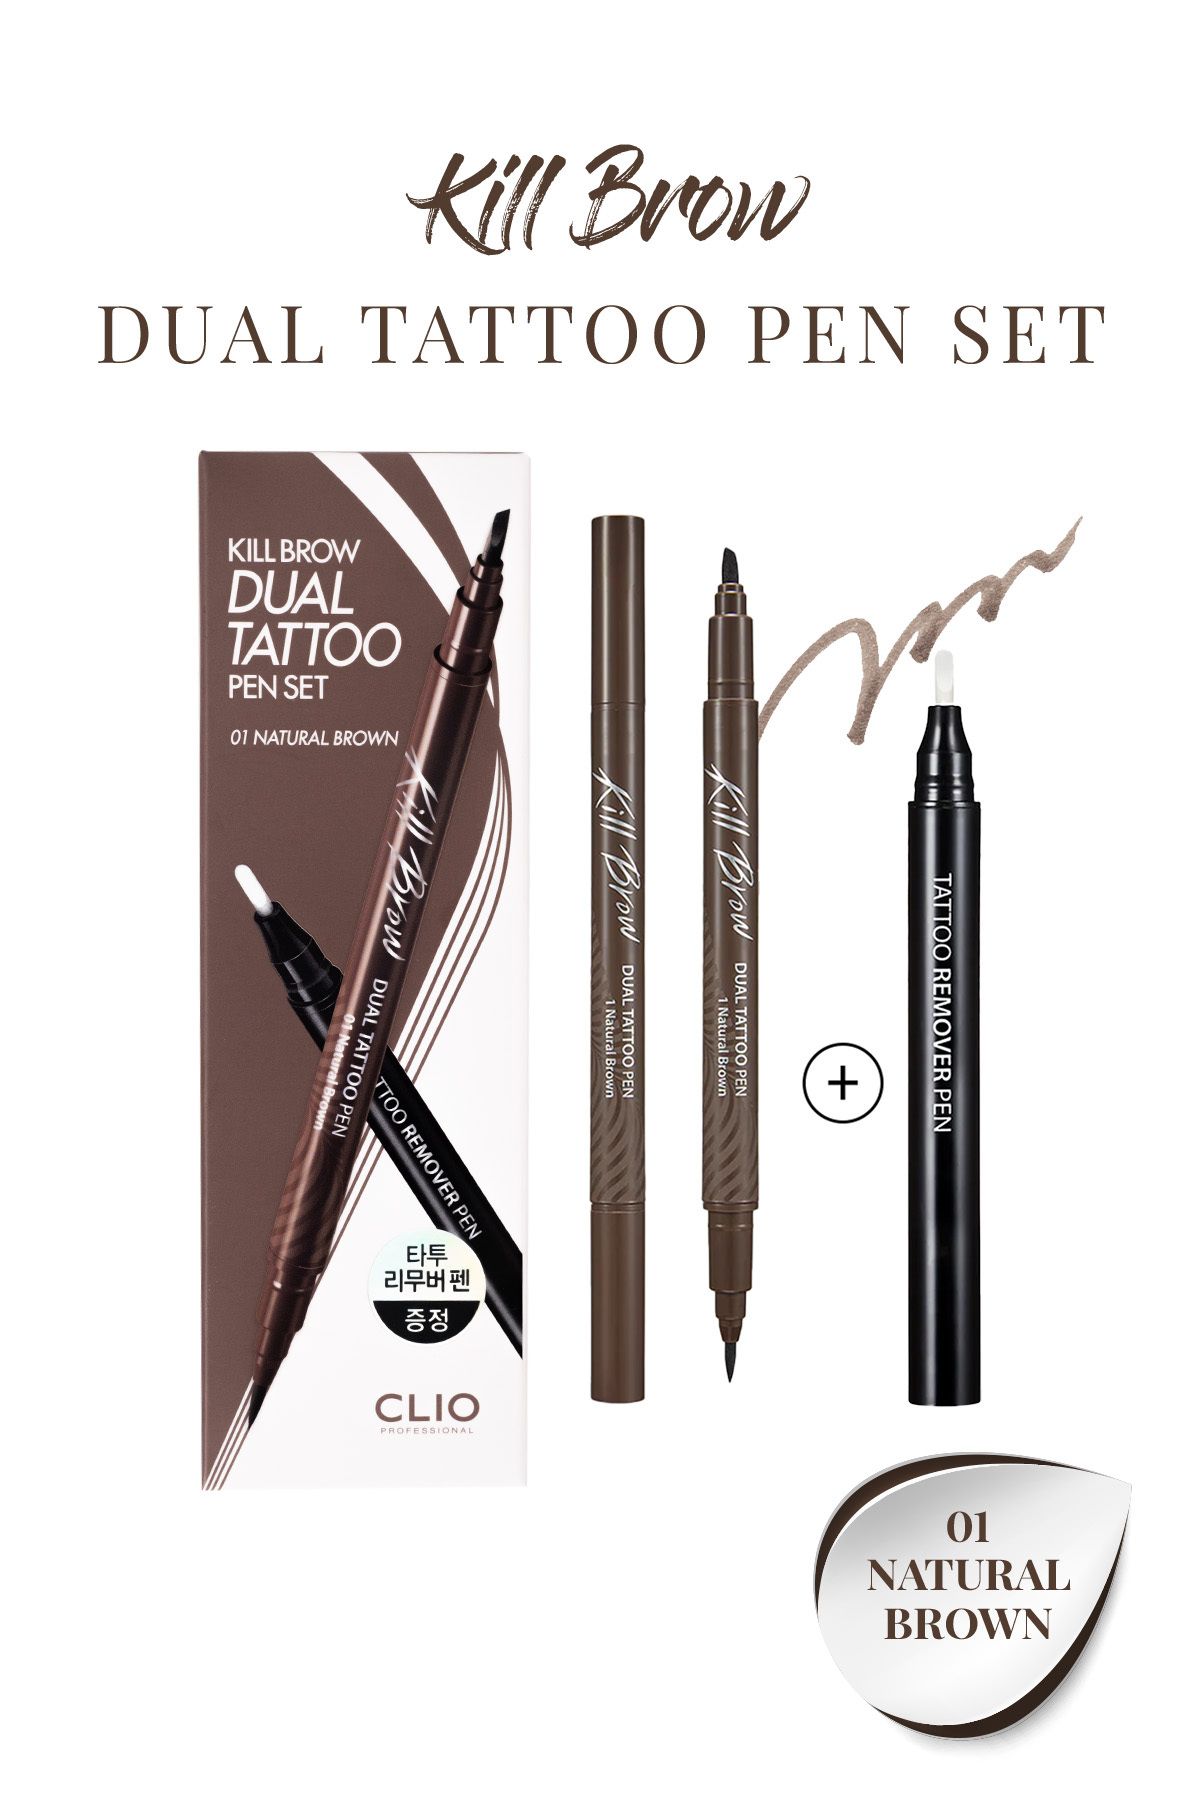 CLIO Yarı Kalıcı Kaş ve Makyaj Düzeltici Kalem Seti Clio Kill Brow Dual Tattoo Pen Set (01 Natural Brown) 6746